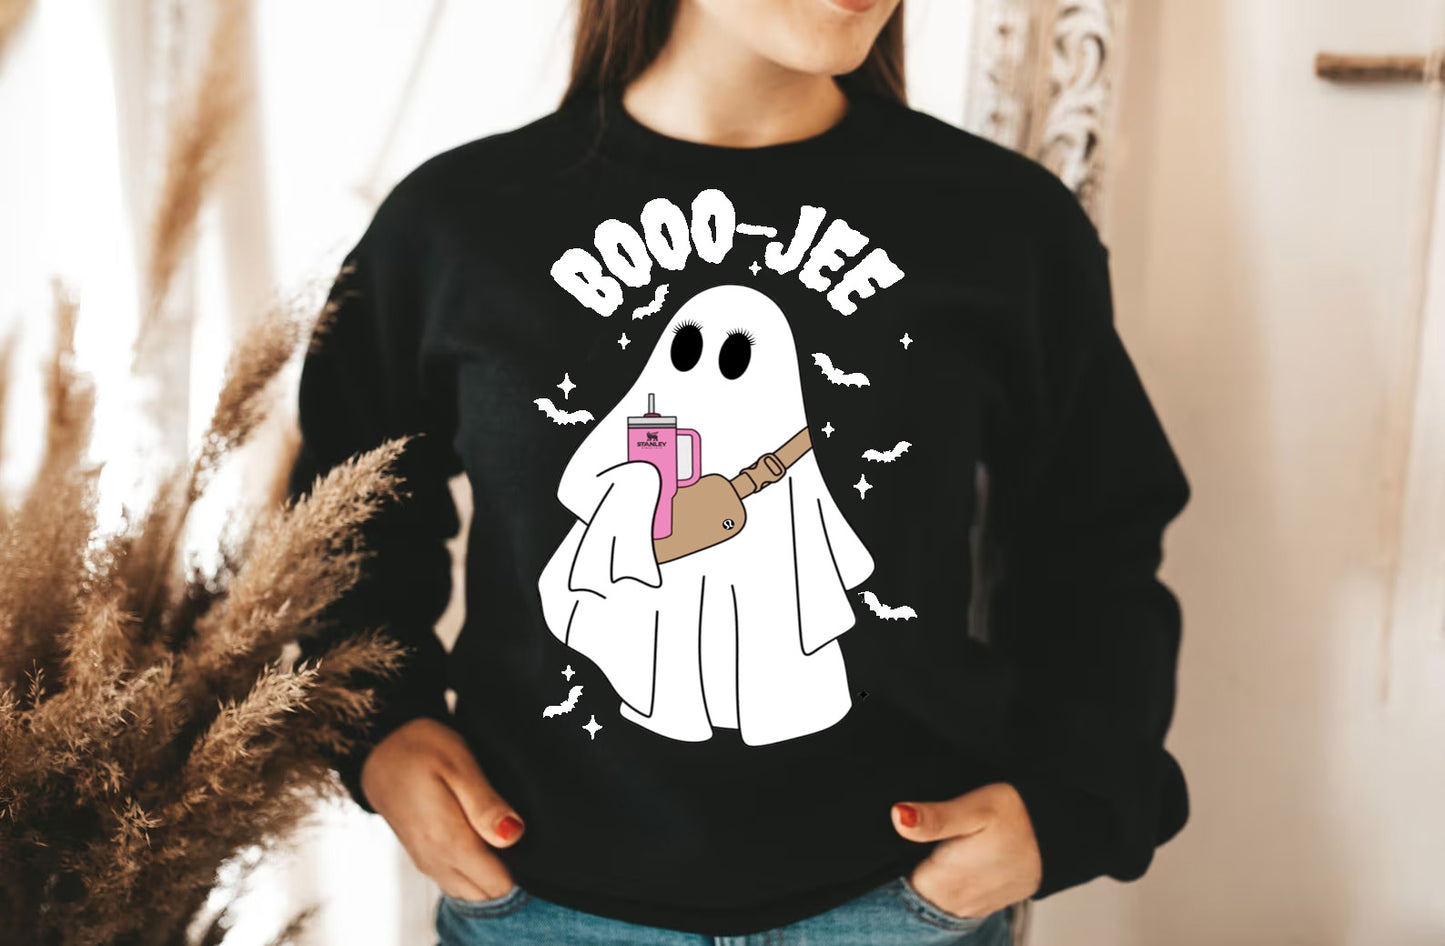 Halloween Boo-Jee Ghost Pink Cup Shirt